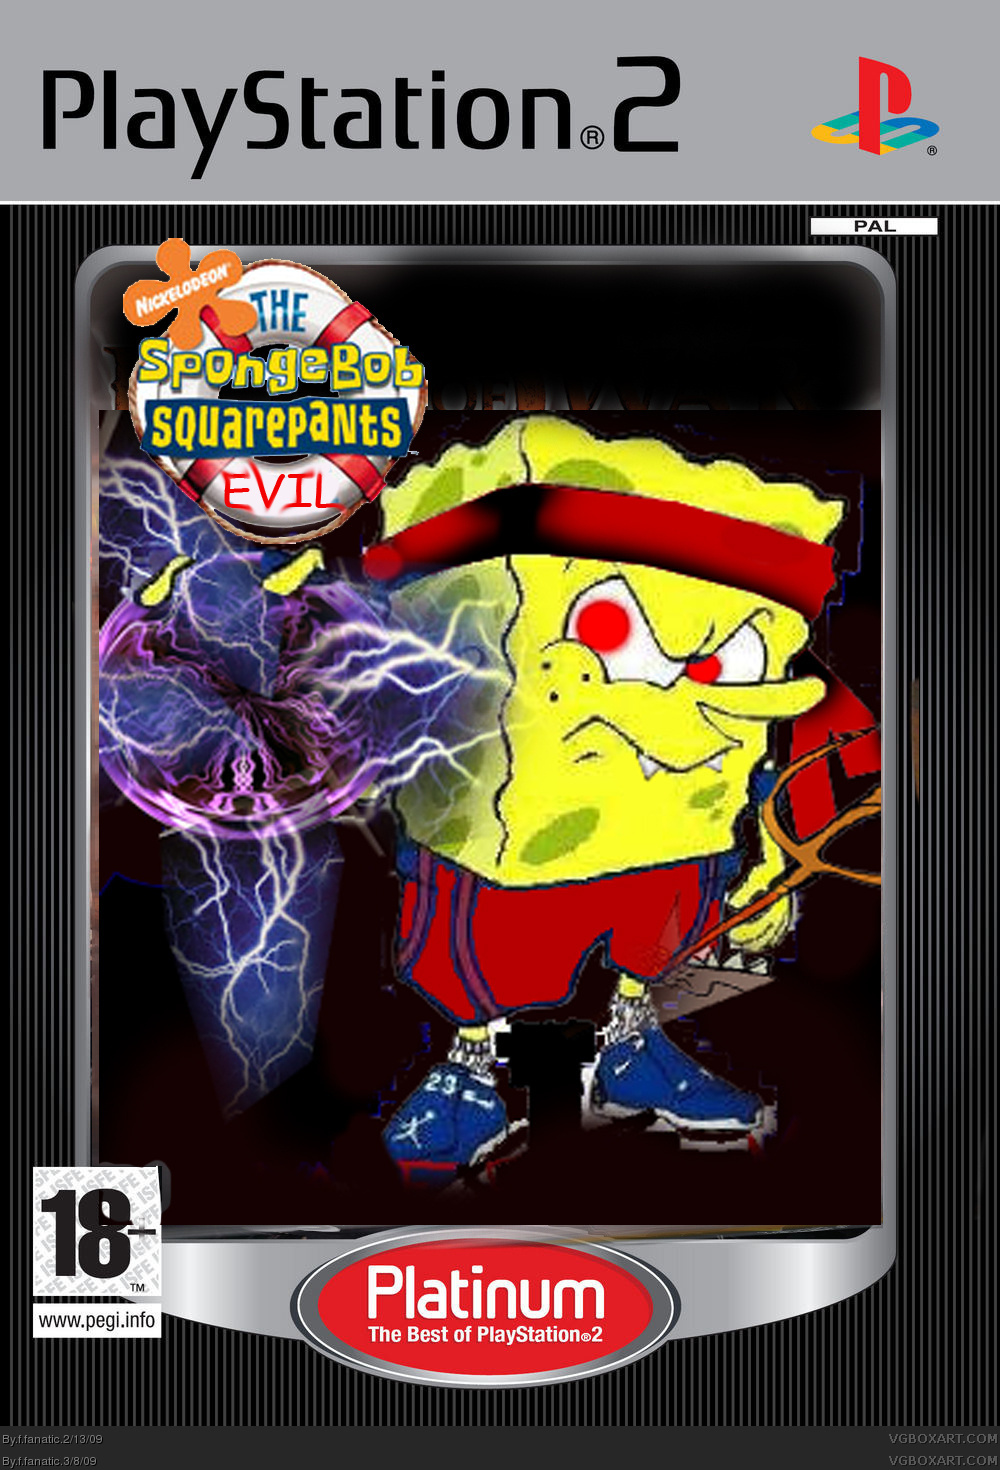 The Spongebob Squarepants EVIL box cover